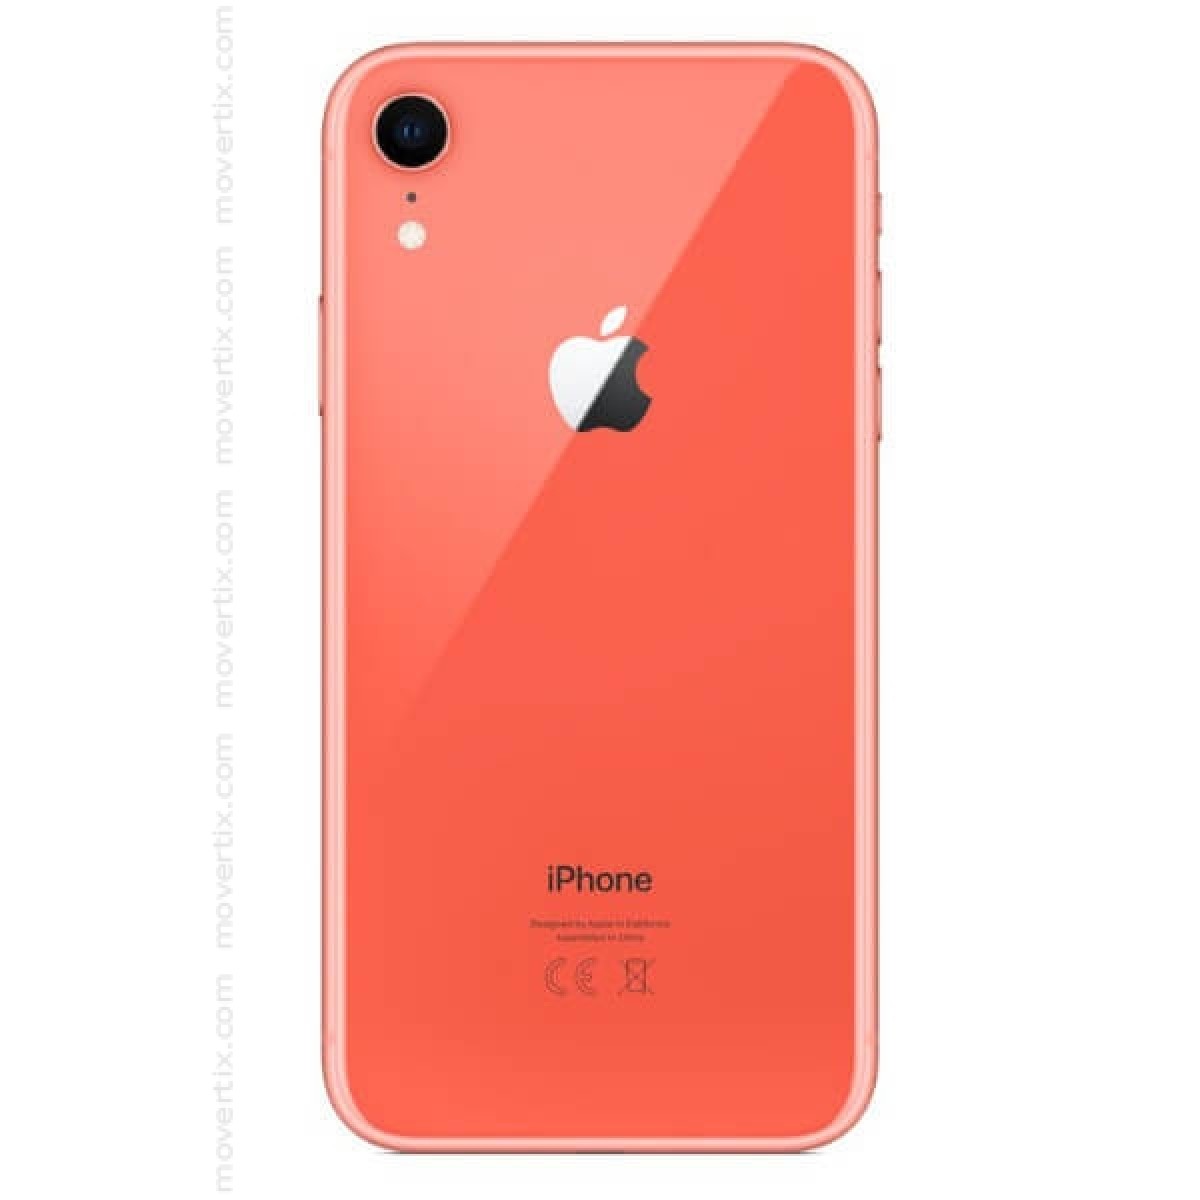 iPhone XR Coral 128GB (0190198774019) | Movertix Mobile Phones Shop